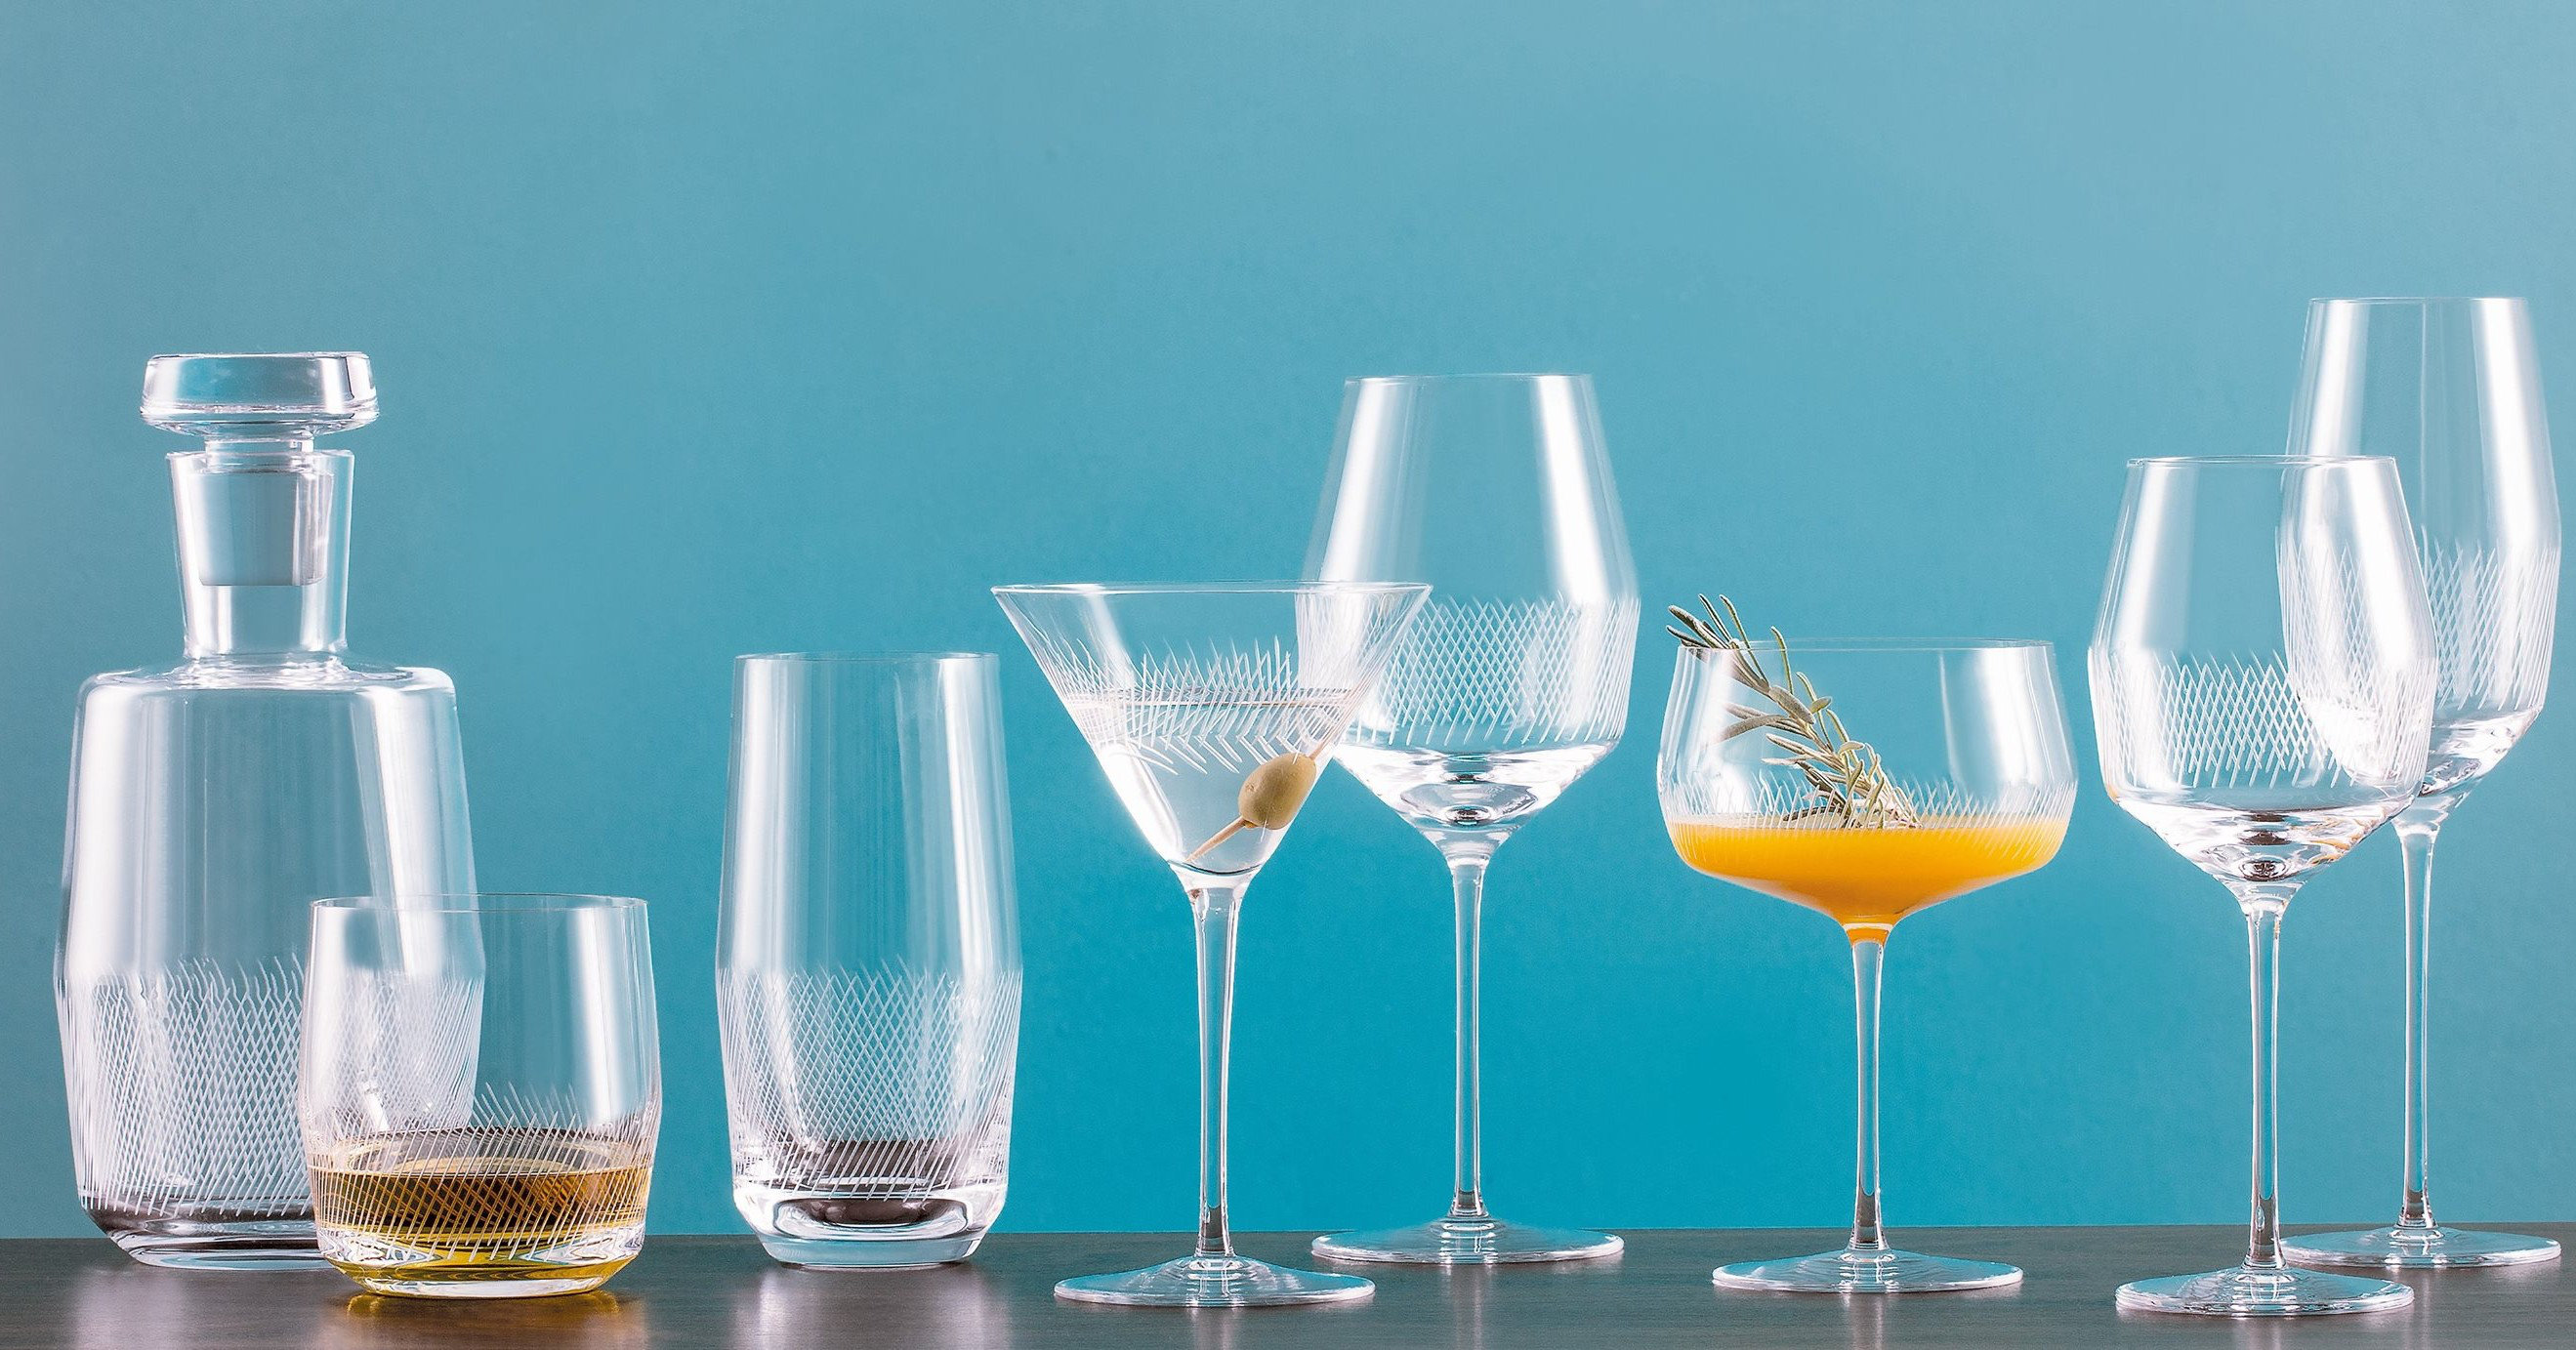 Schott Zwiesel - Basic Bar Classic Drinking glasses